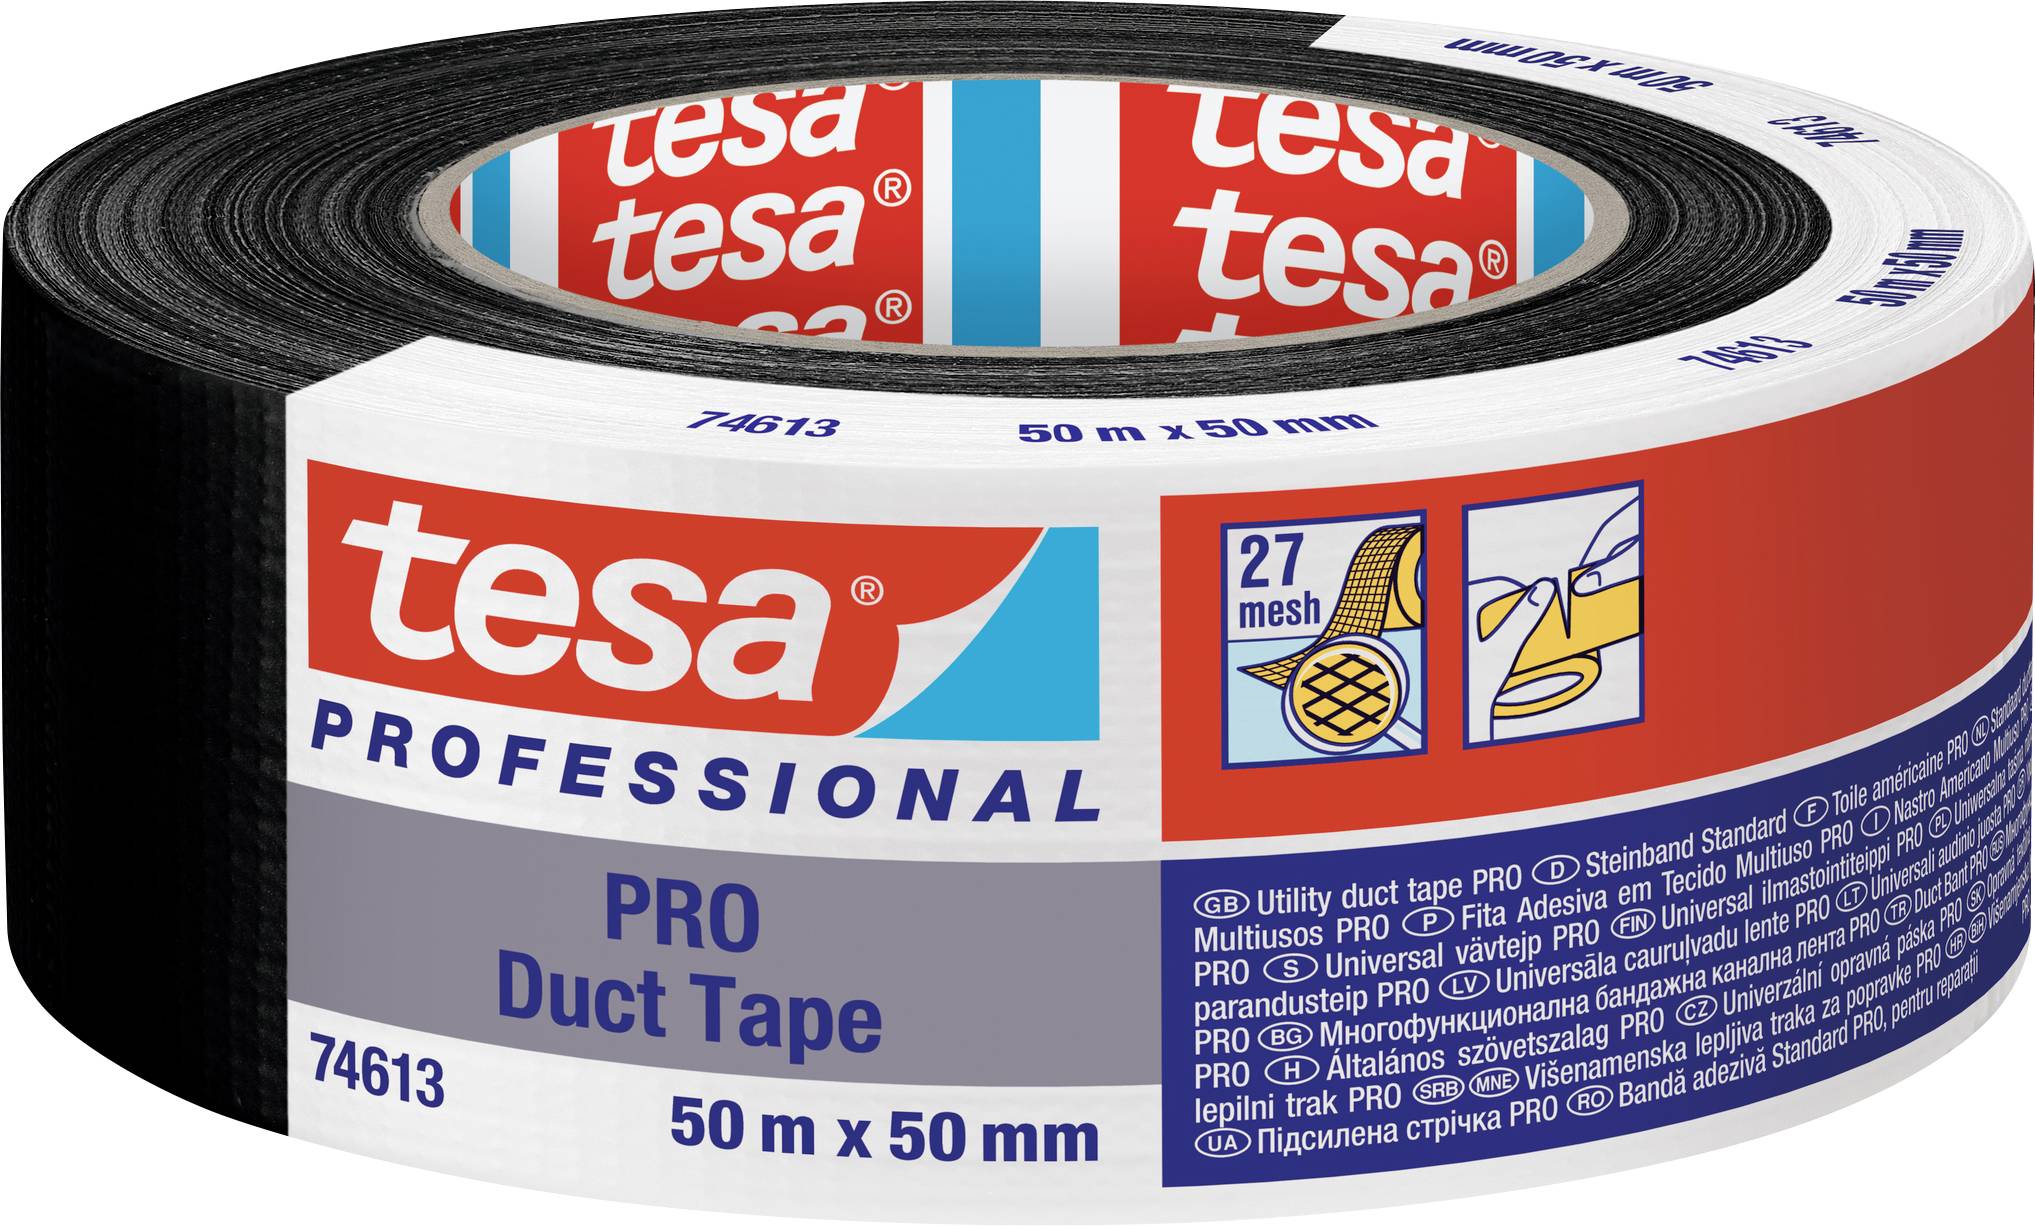 Tesa 210267 50 mx 50 mm Adhesive Tape in Standard Paper